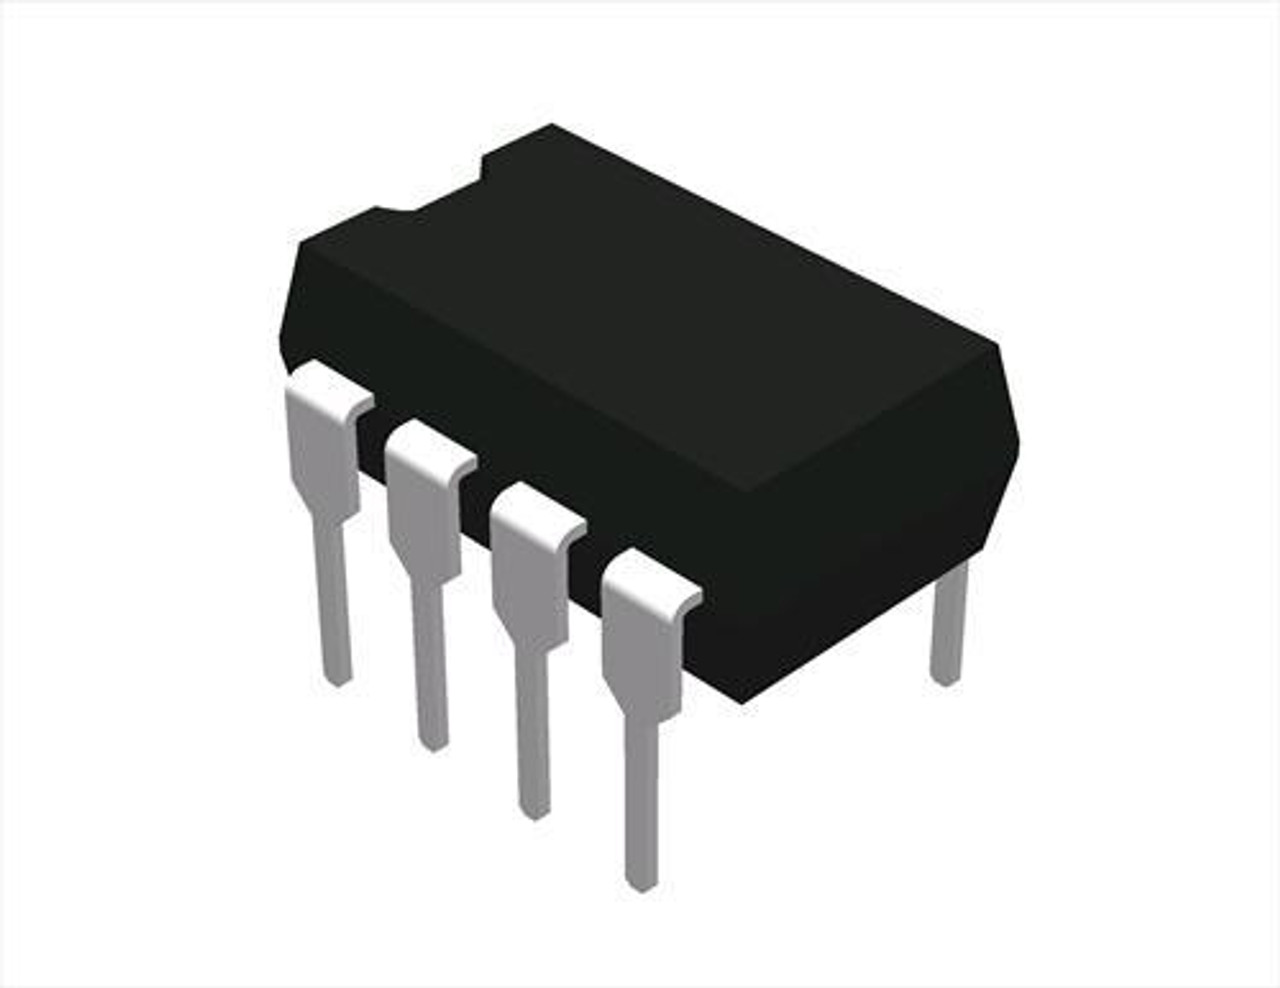 CNY47-2 ; Dual Optocoupler Transistor Output, DIP-8